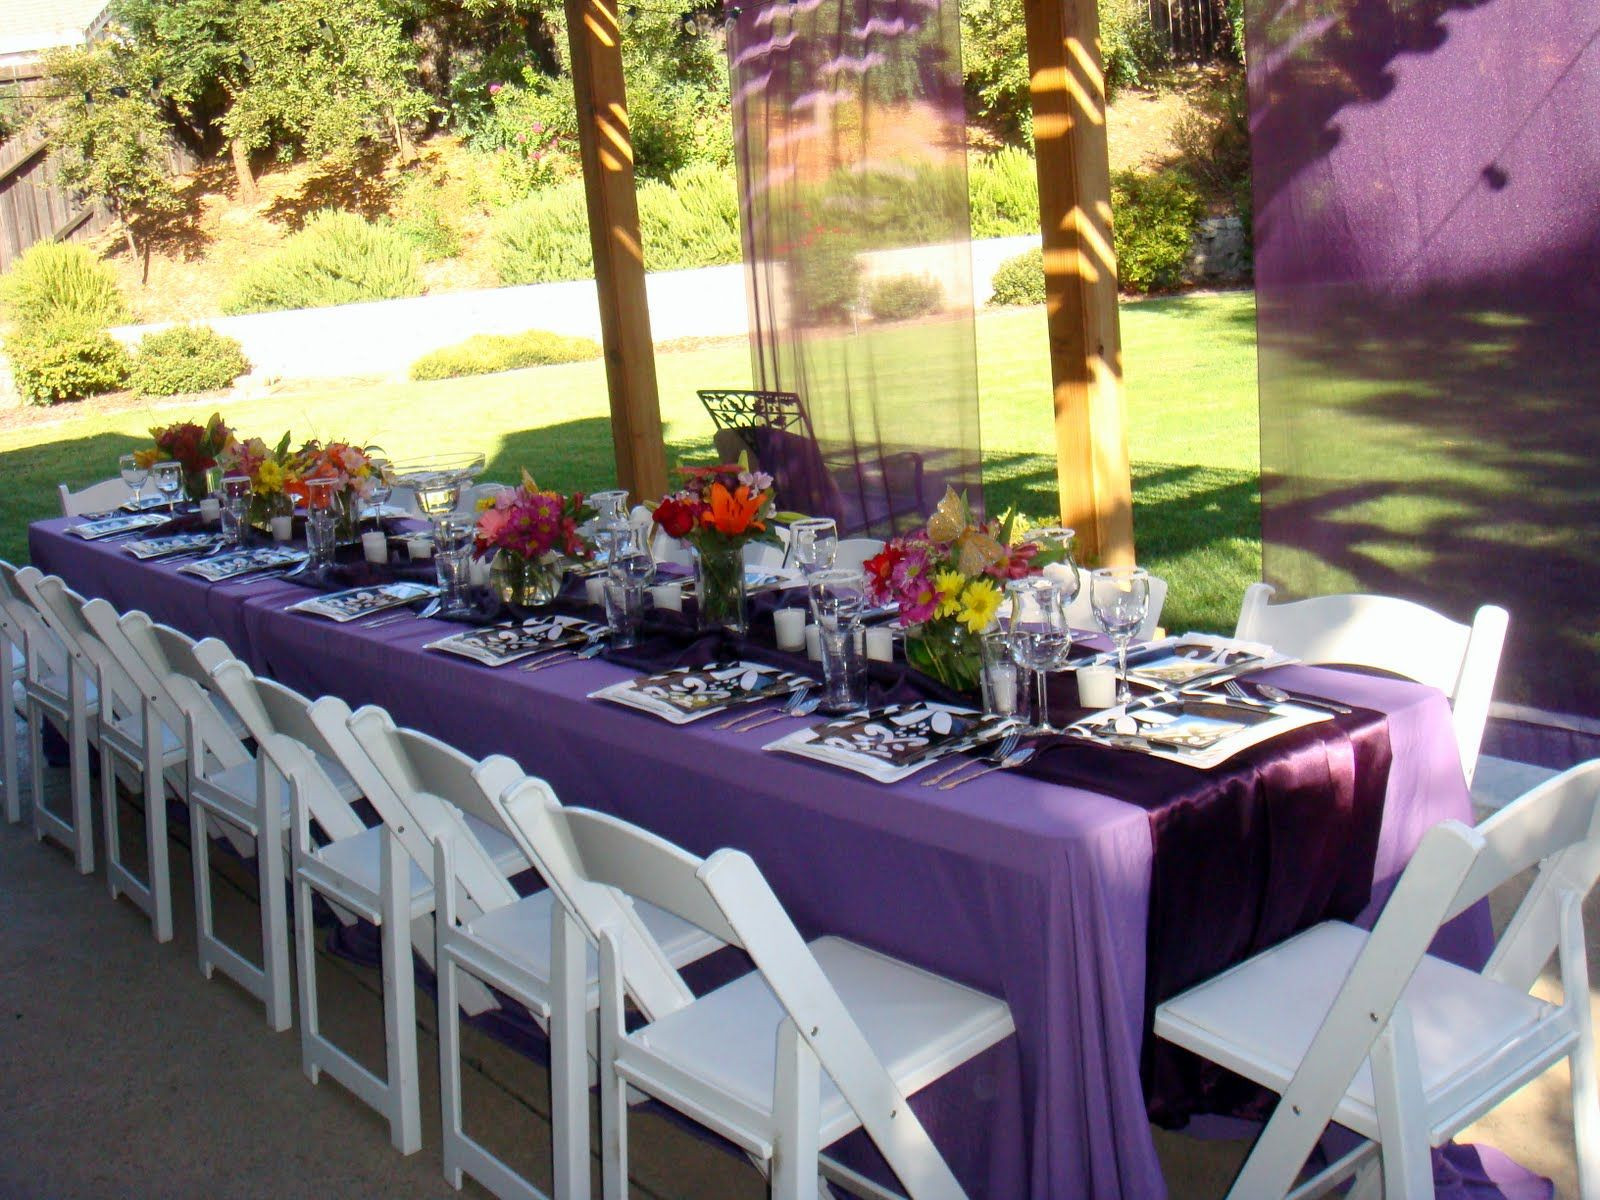 Outdoor College Graduation Party Ideas
 tablescapes for outdoor graduation party